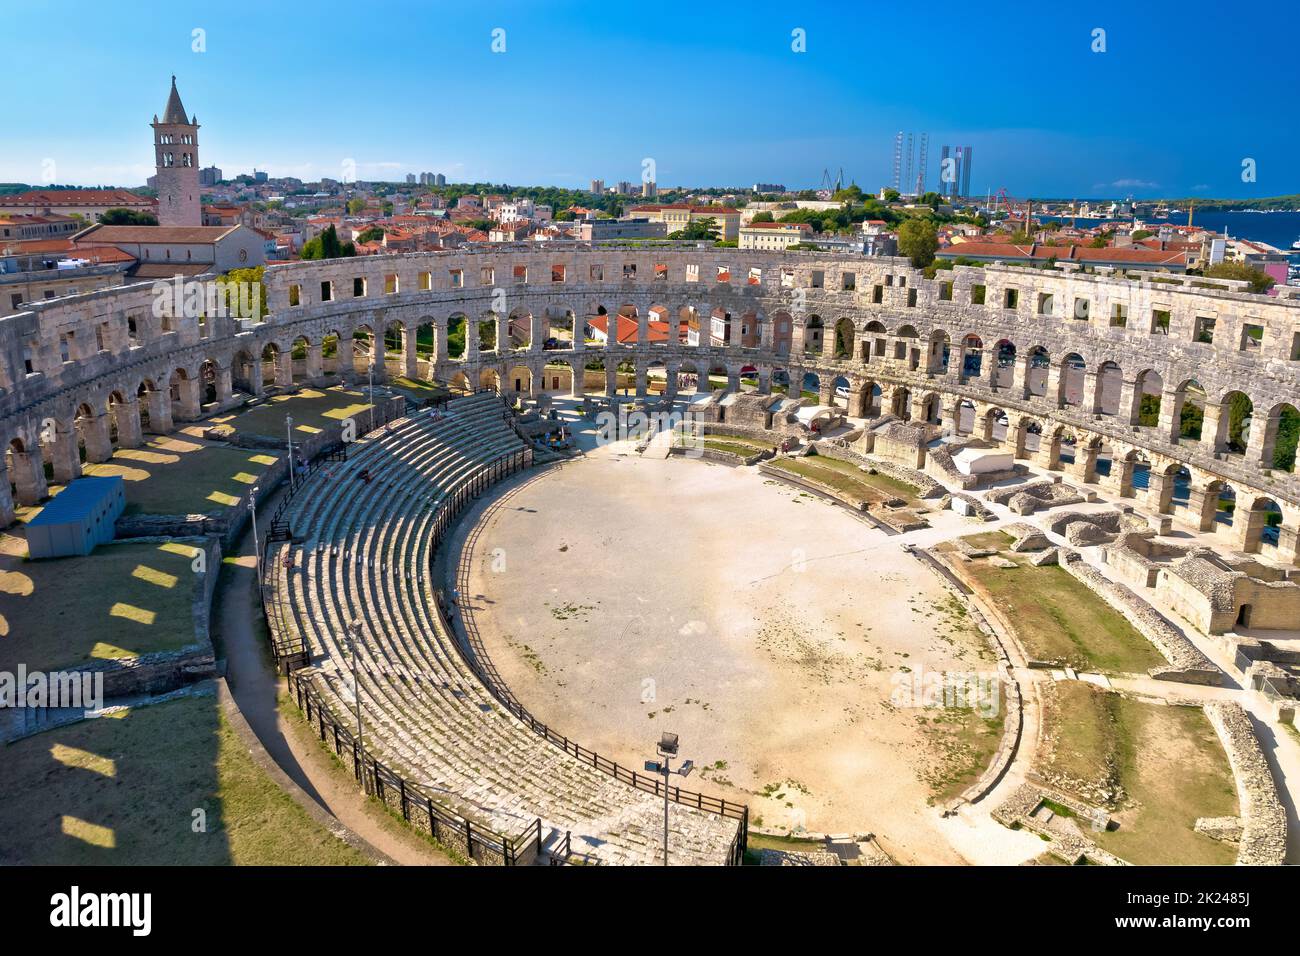 Arena Pula. Monumental Roman amphitheatre in Pula aerial view, Istria region of Croatia Stock Photo